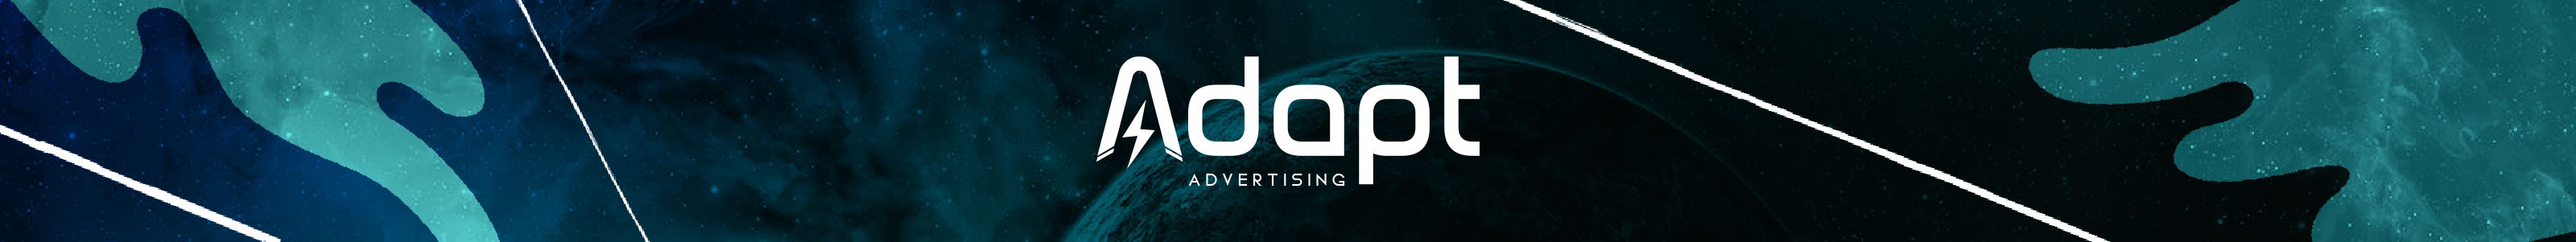 ADAPT CREW's profile banner